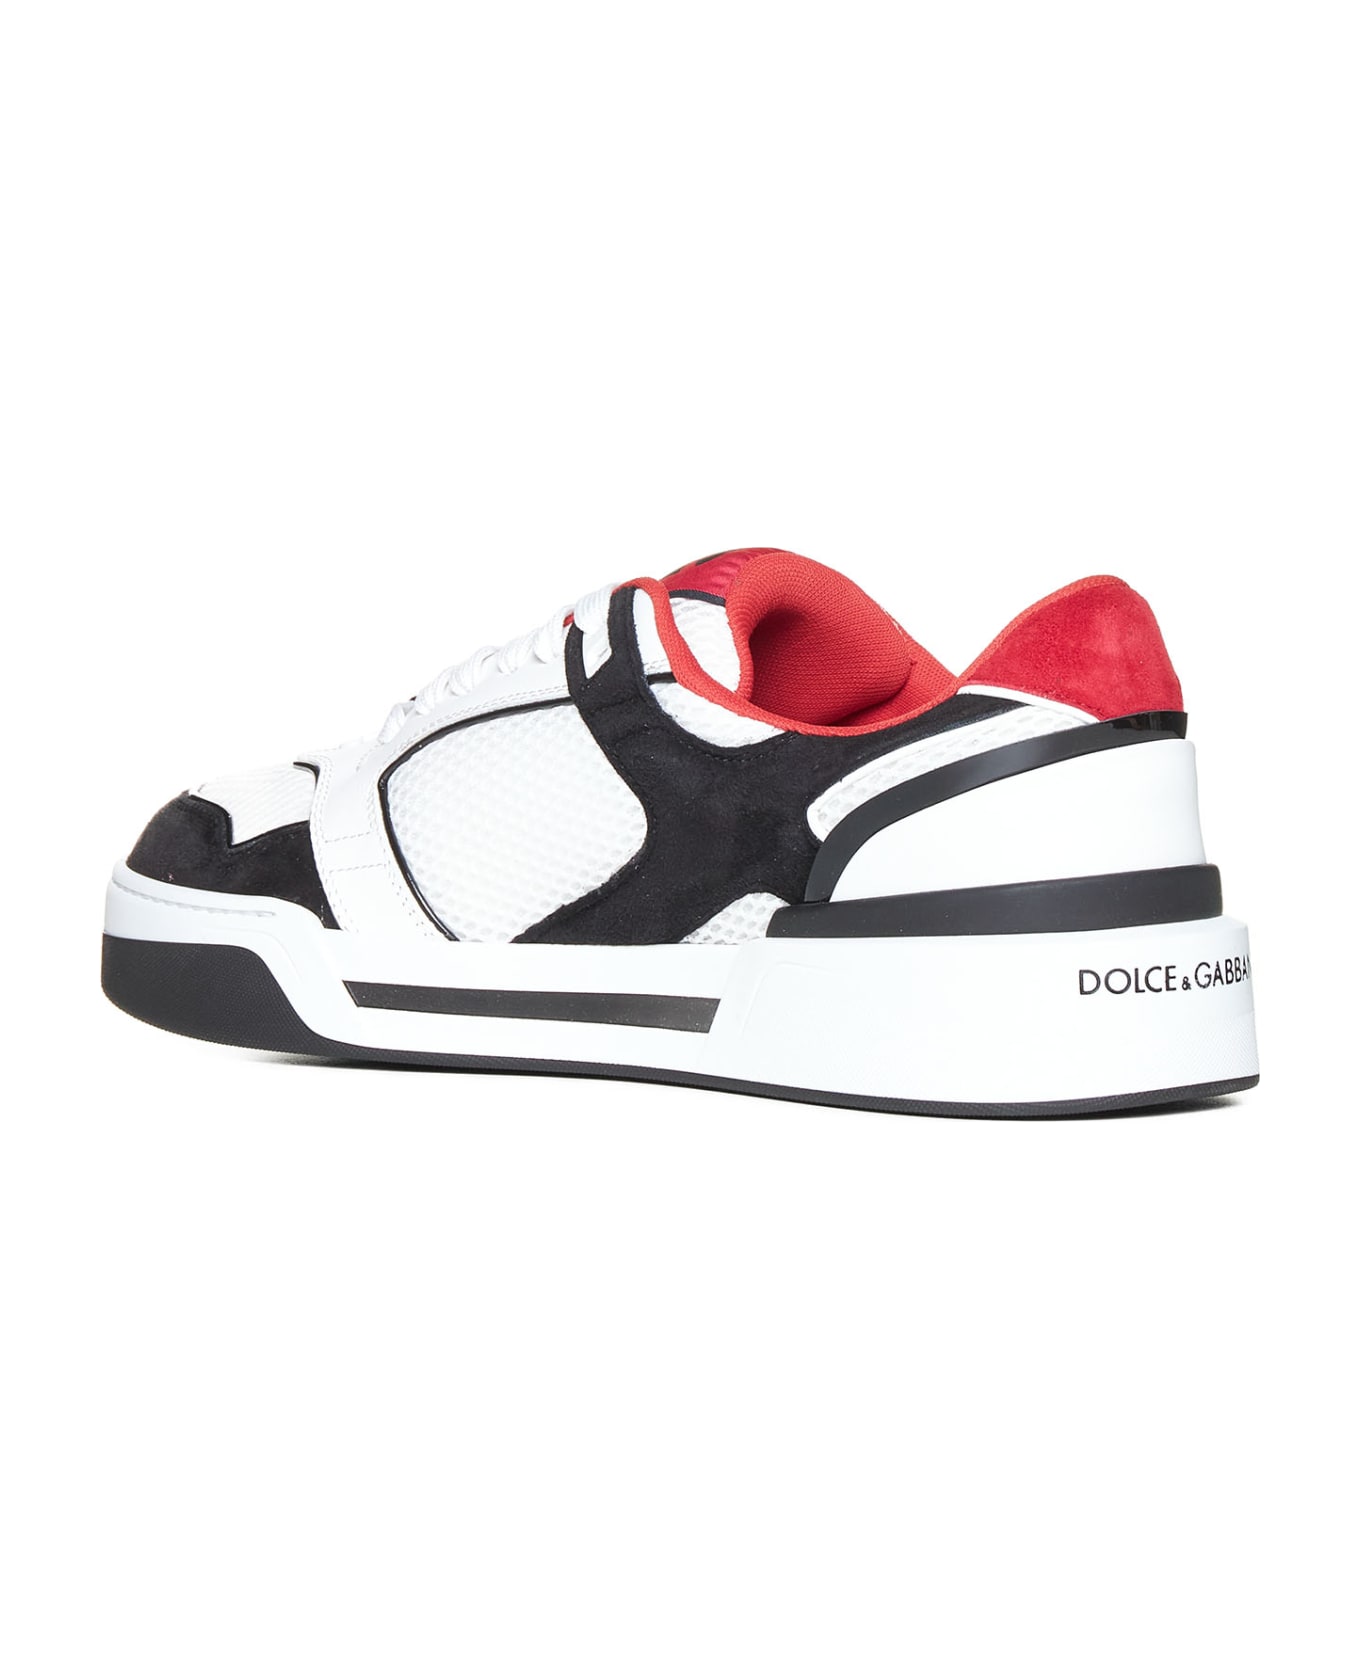 Dolce & Gabbana New Roma Sneakers - Nero/bianco スニーカー